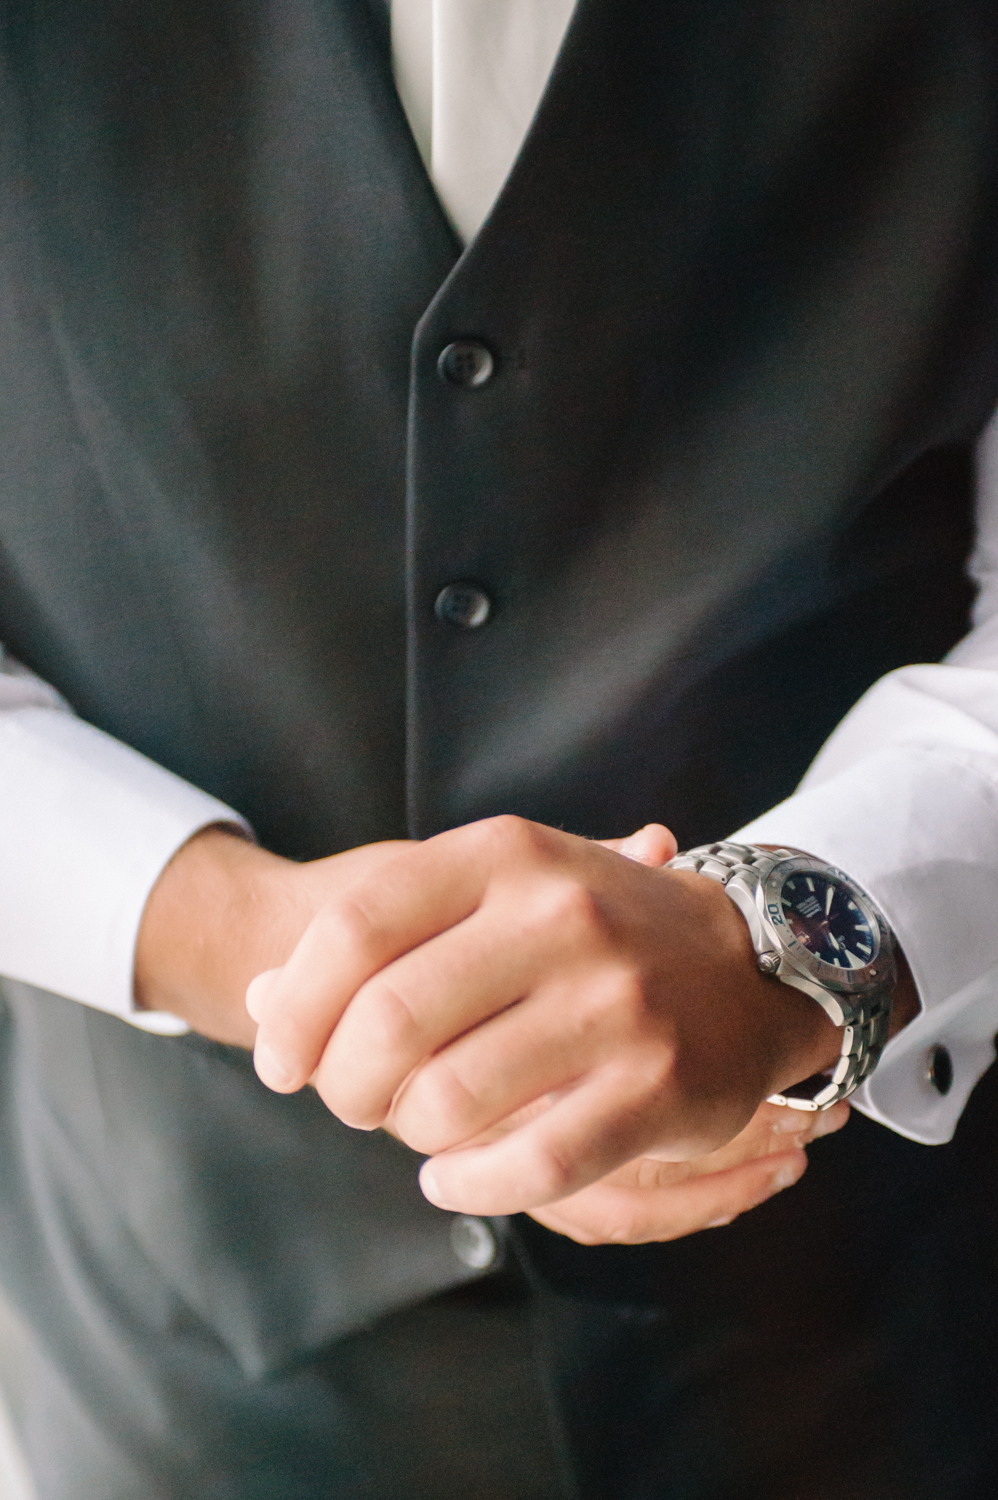 Detail of groom's watch, Chicago wedding photographer Erica Robnett Photography